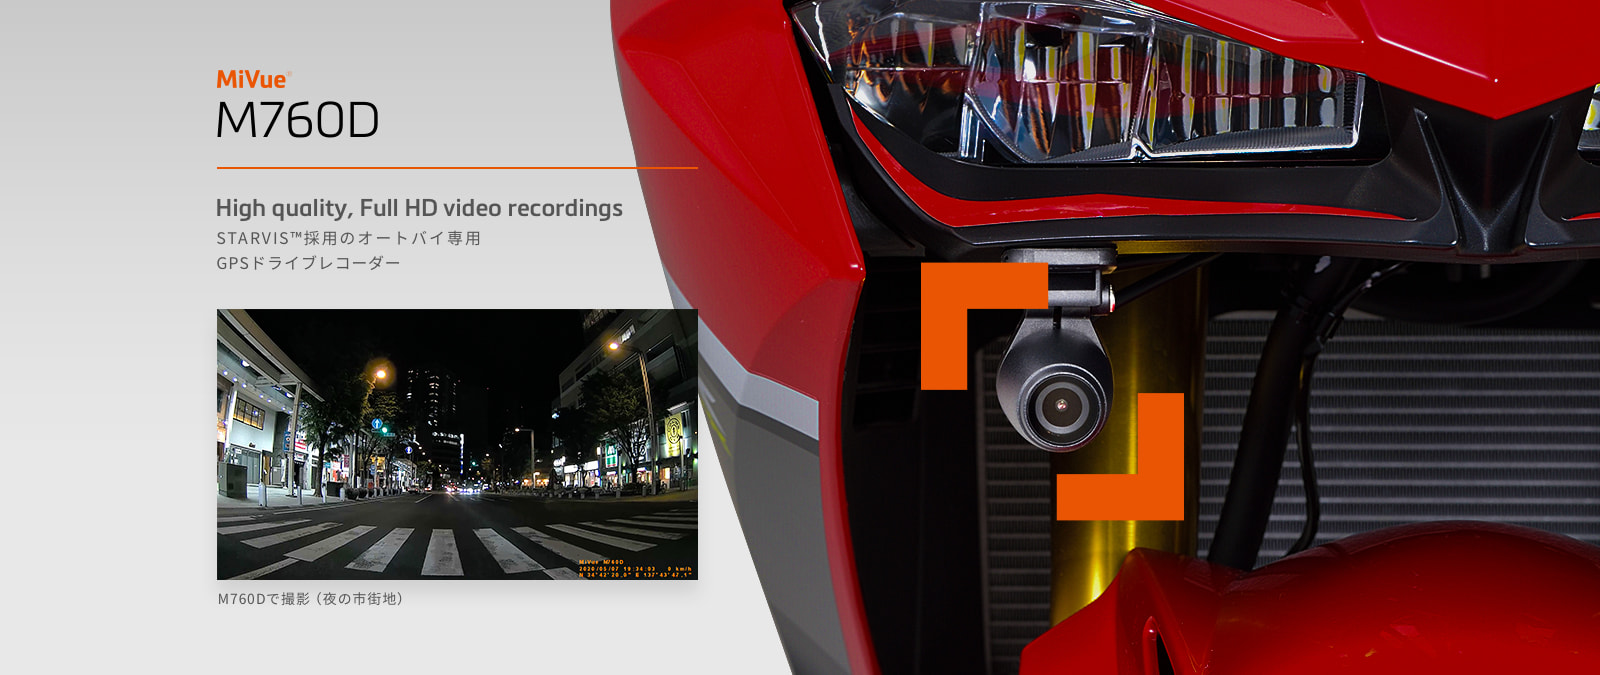 MiVue M760D「High quality, Full HD video recordings」Starvis TM 採用のオートバイ専用 GPSドライブレコーダー｜オートバイ専用GPSドライブレコーダー